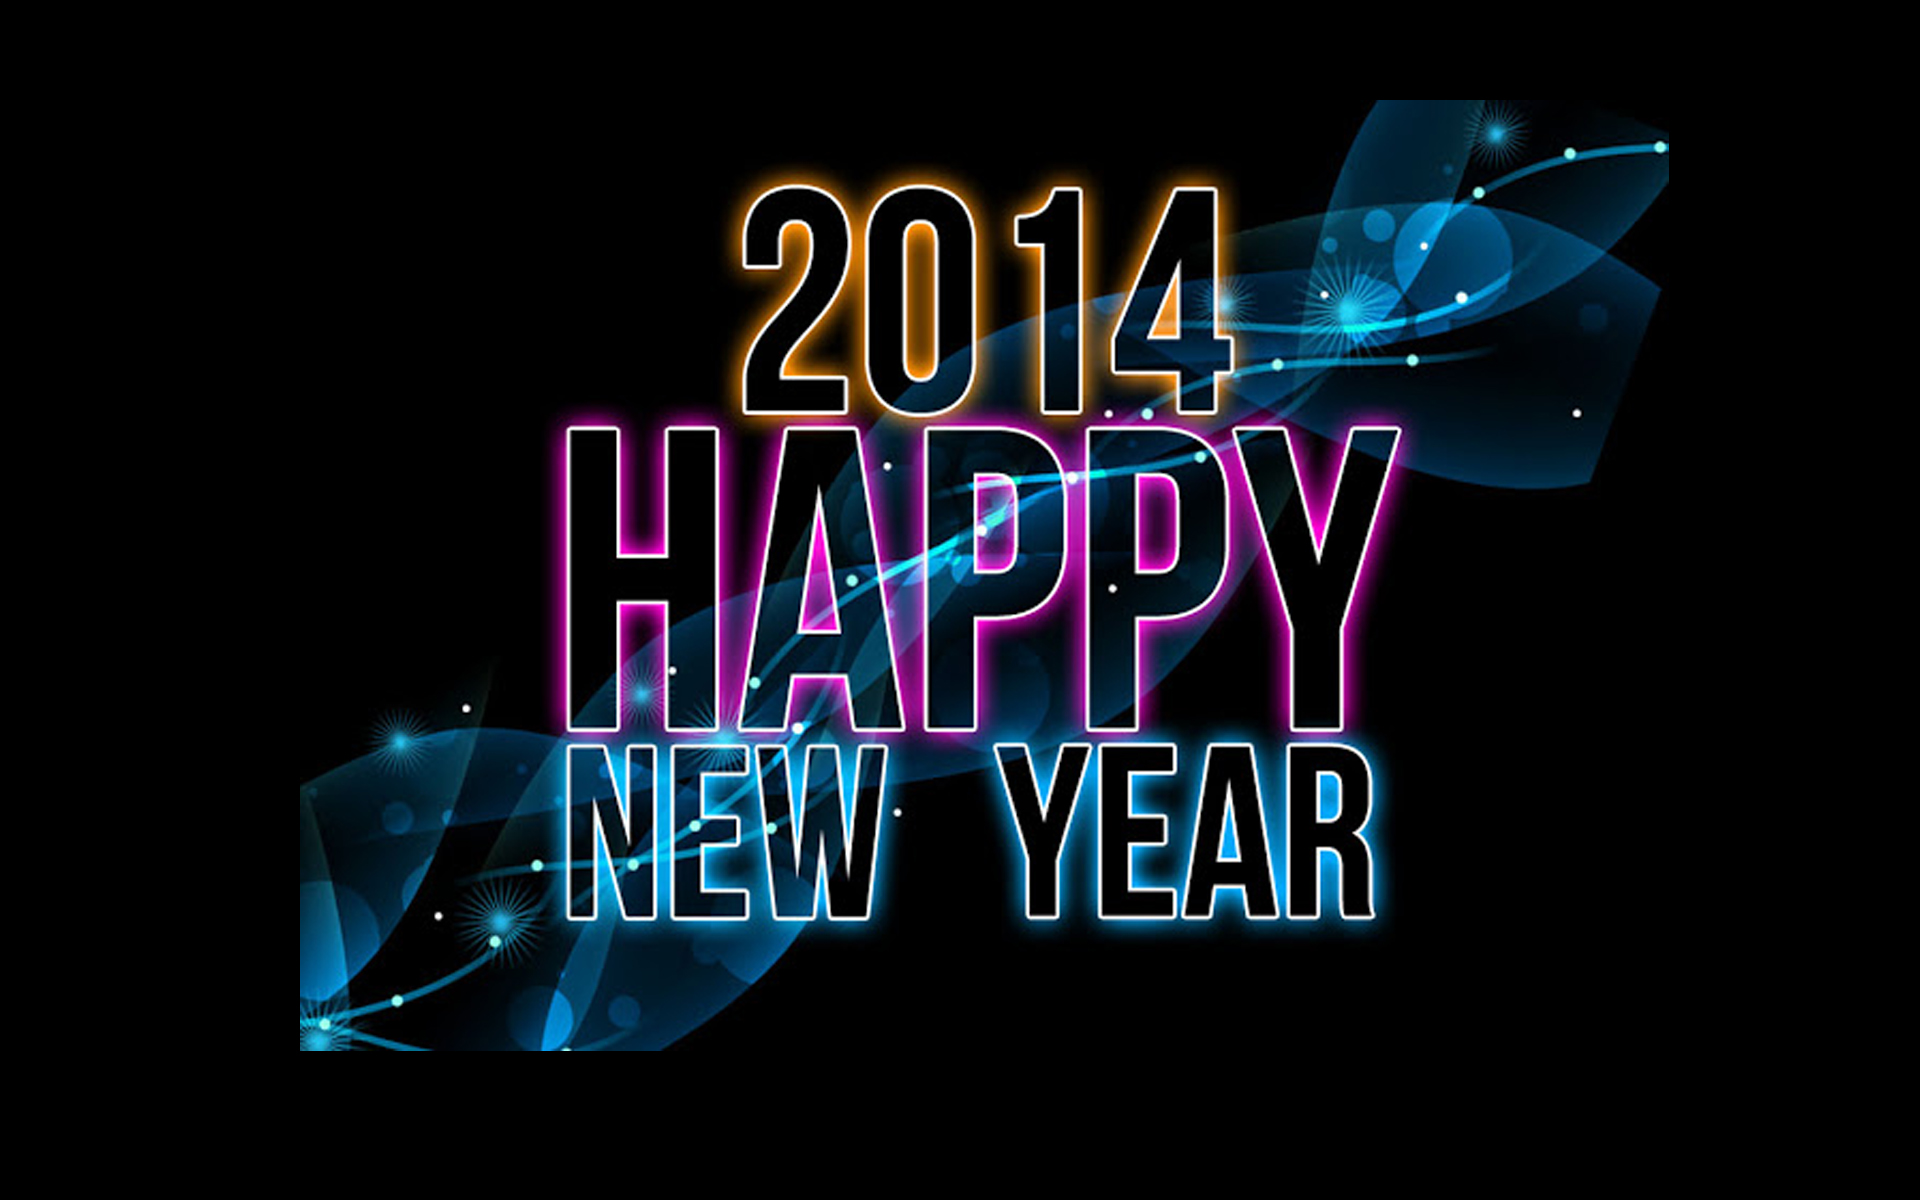 Beautiful Happy New Year 2014 Wallpaper for Greetings | Incredible ...